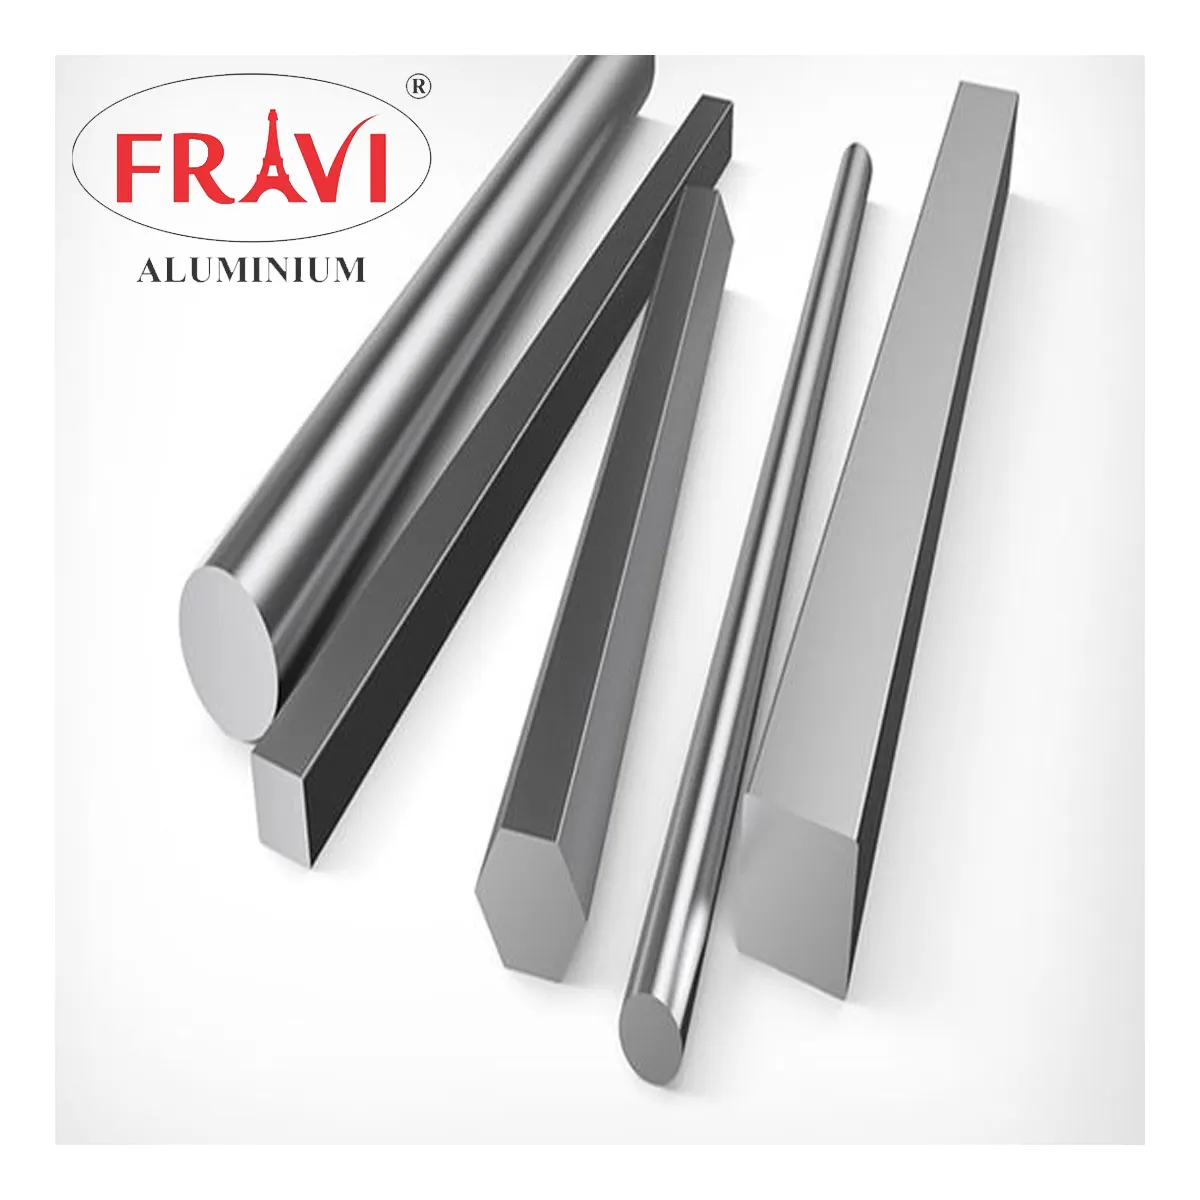 Factory Price Aluminum Bars Originated From Viet Nam Manufacturer Customized To Customer's Design